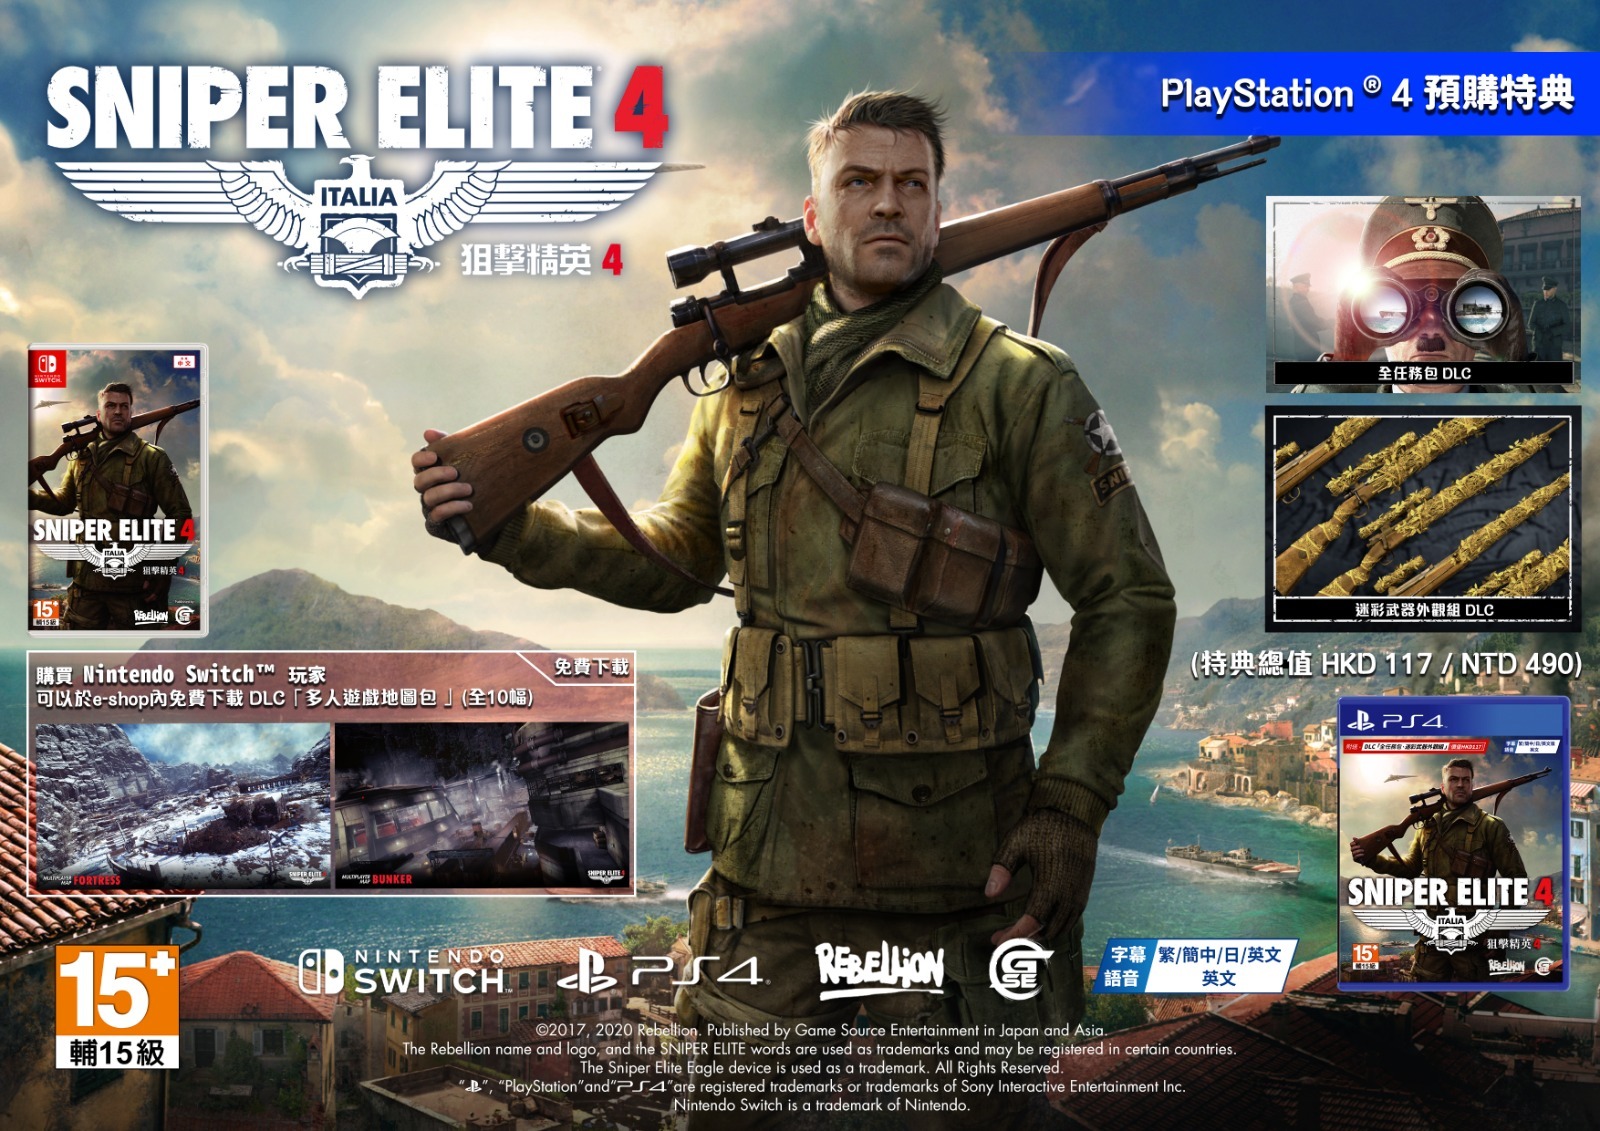 Nintendo elite. Sniper Elite 4 Nintendo Switch. Sniper Elite 4 Italia (Xbox one). Sniper Elite VR на пс4. Sniper Elite 4 [Switch].